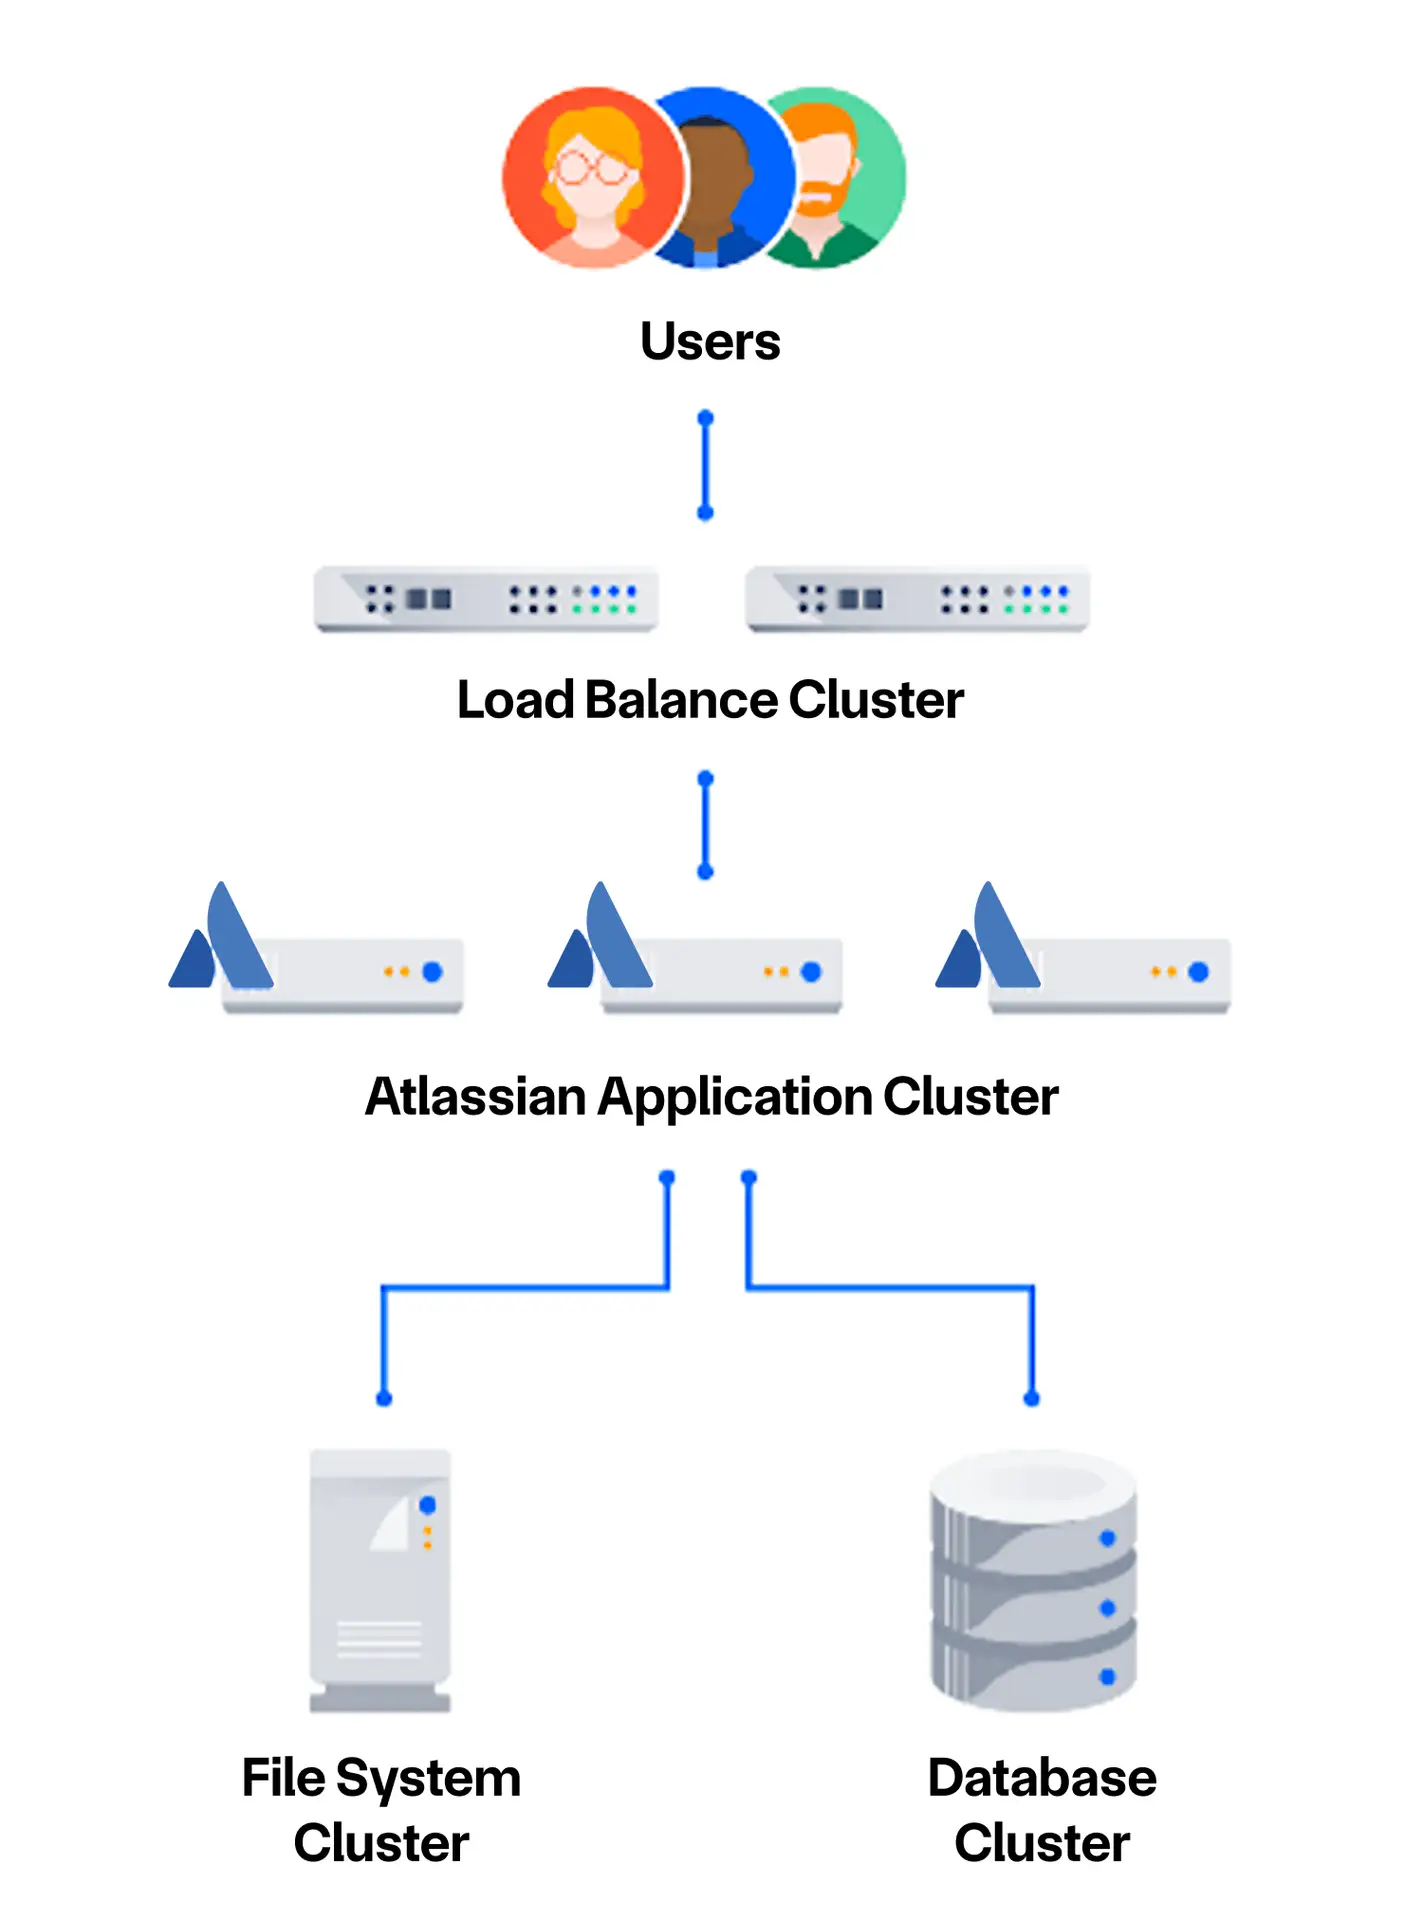 Funktionsweise des Atlassian Data Centers